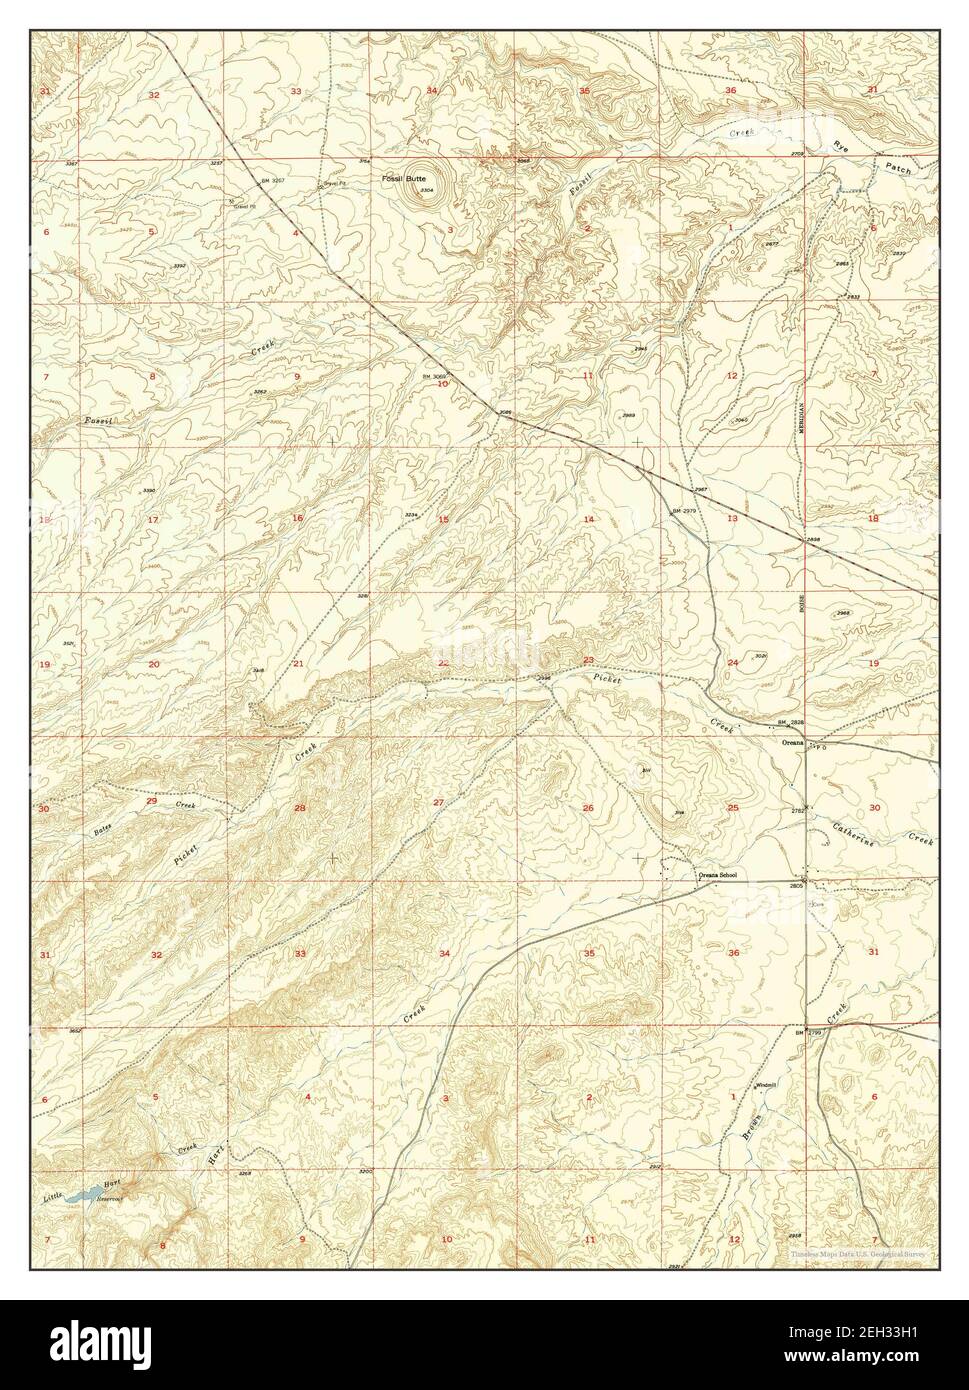 Oreana, Idaho, map 1950, 1:24000, United States of America by Timeless Maps, data U.S. Geological Survey Stock Photo